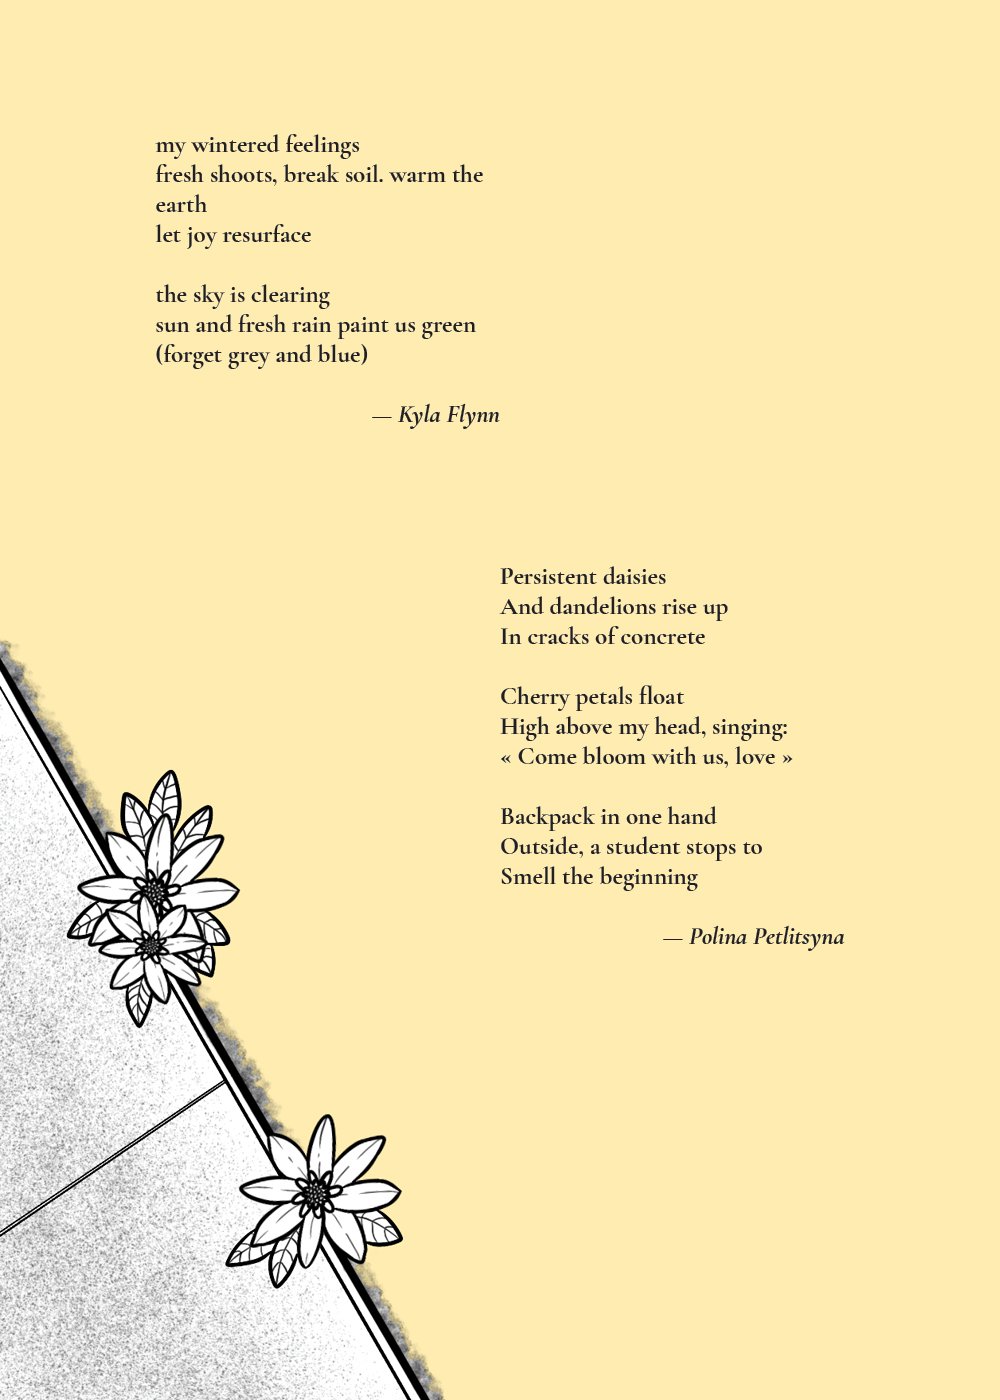 Haikus by Kyla and Polina.